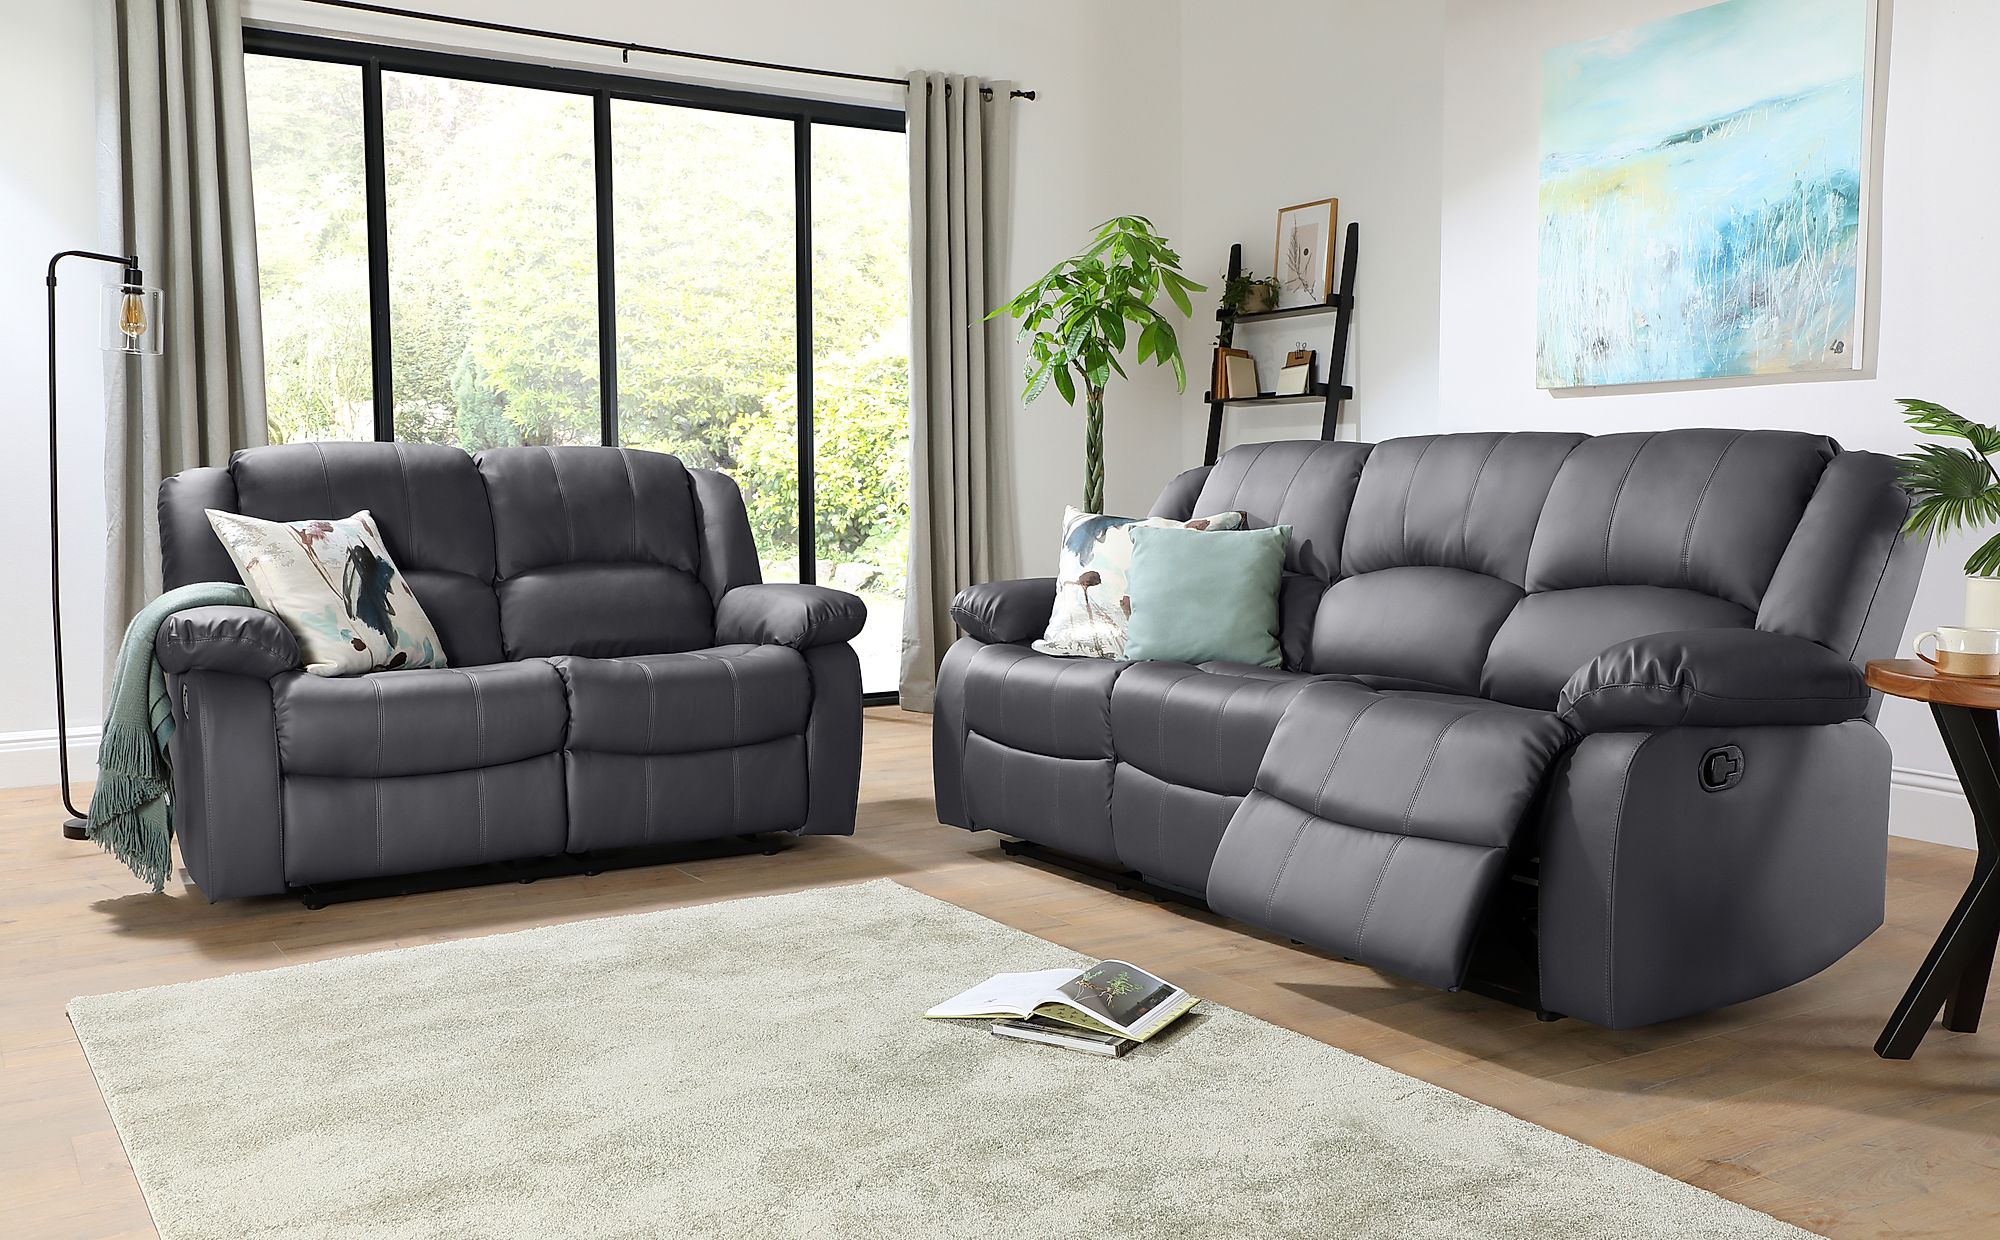 leather recliner sofa sets sale atlanta cheap